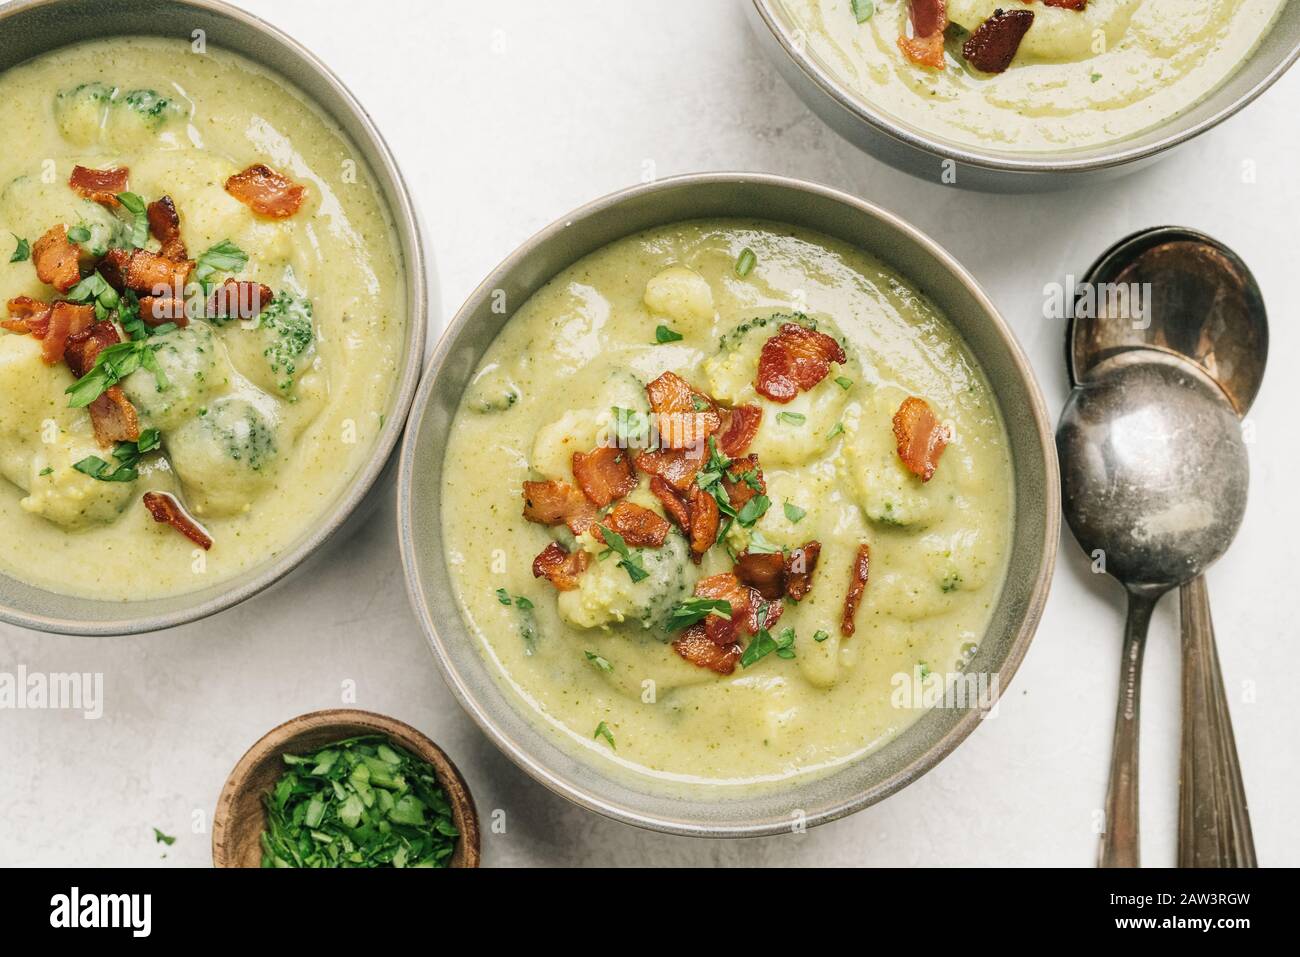 Potato and broccoli soup with bacon table setting Stock Photo